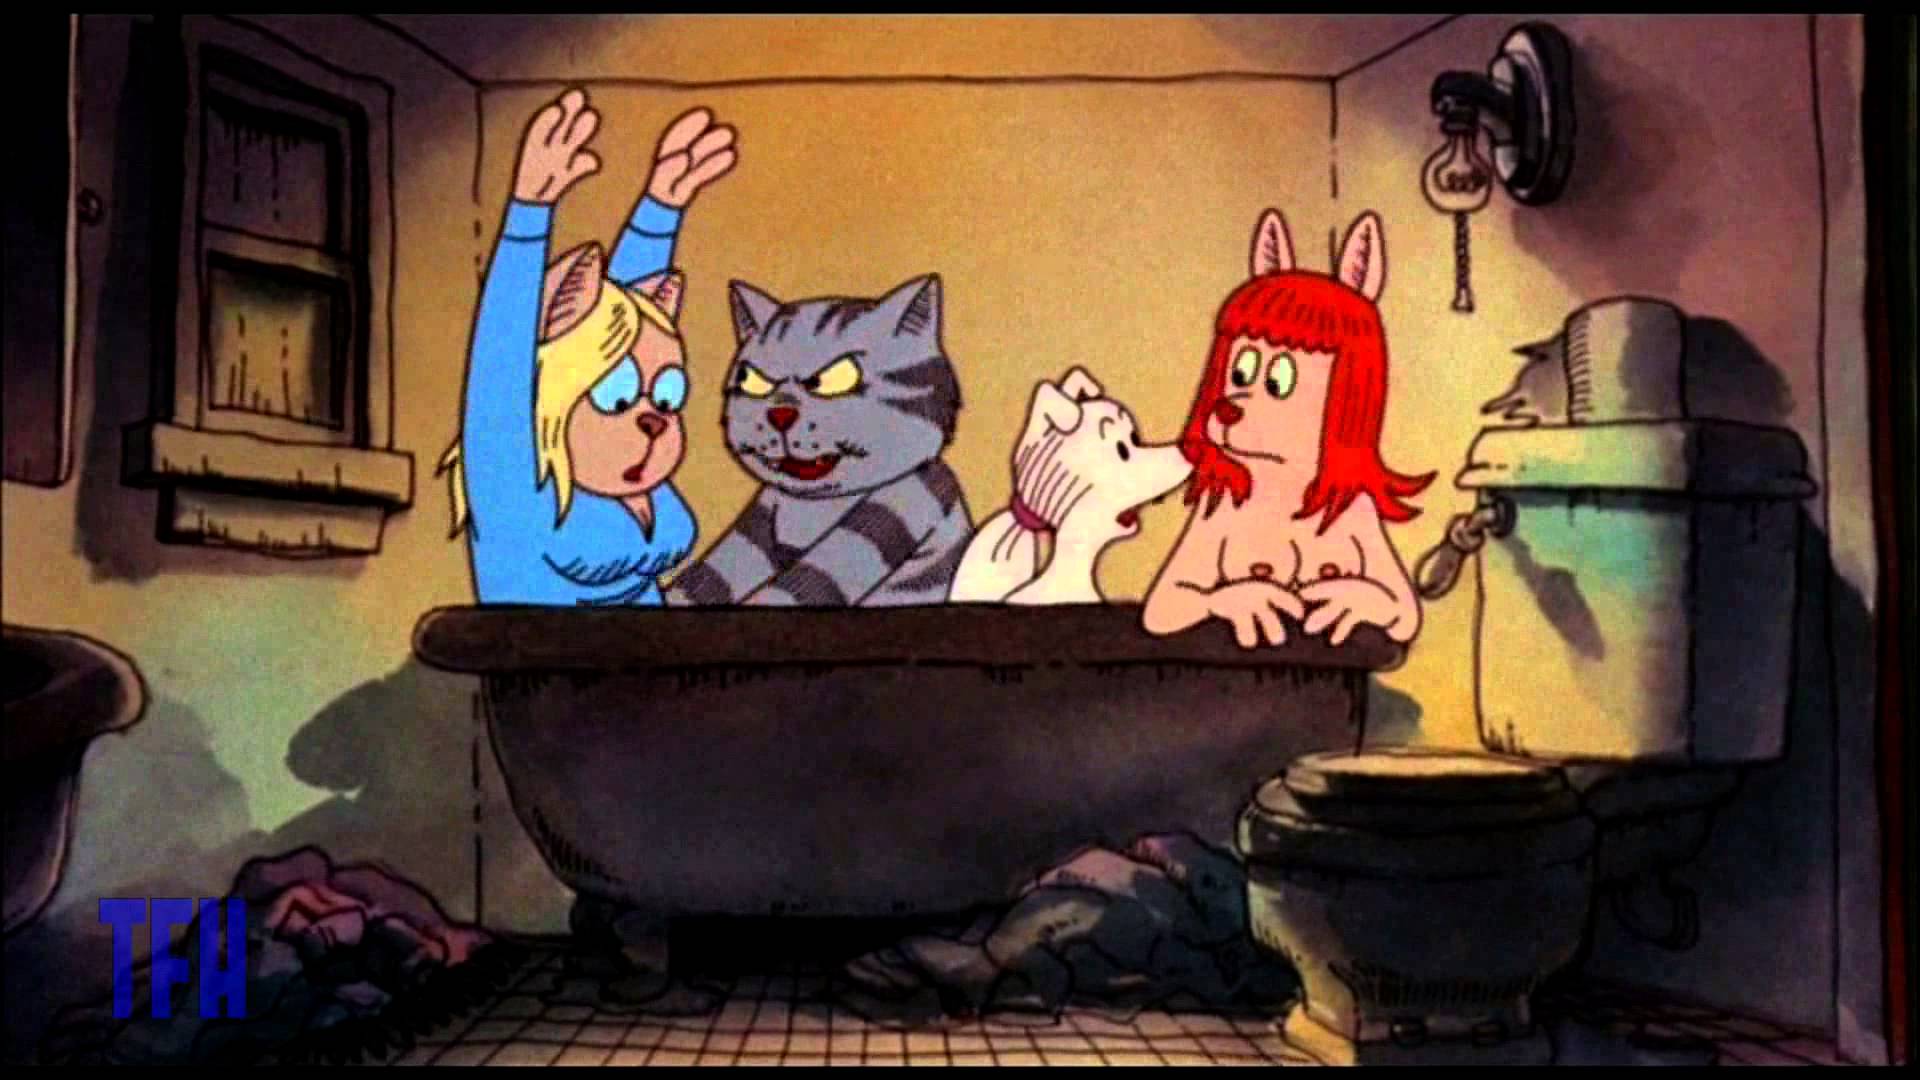 Cartoons that have sex scenes